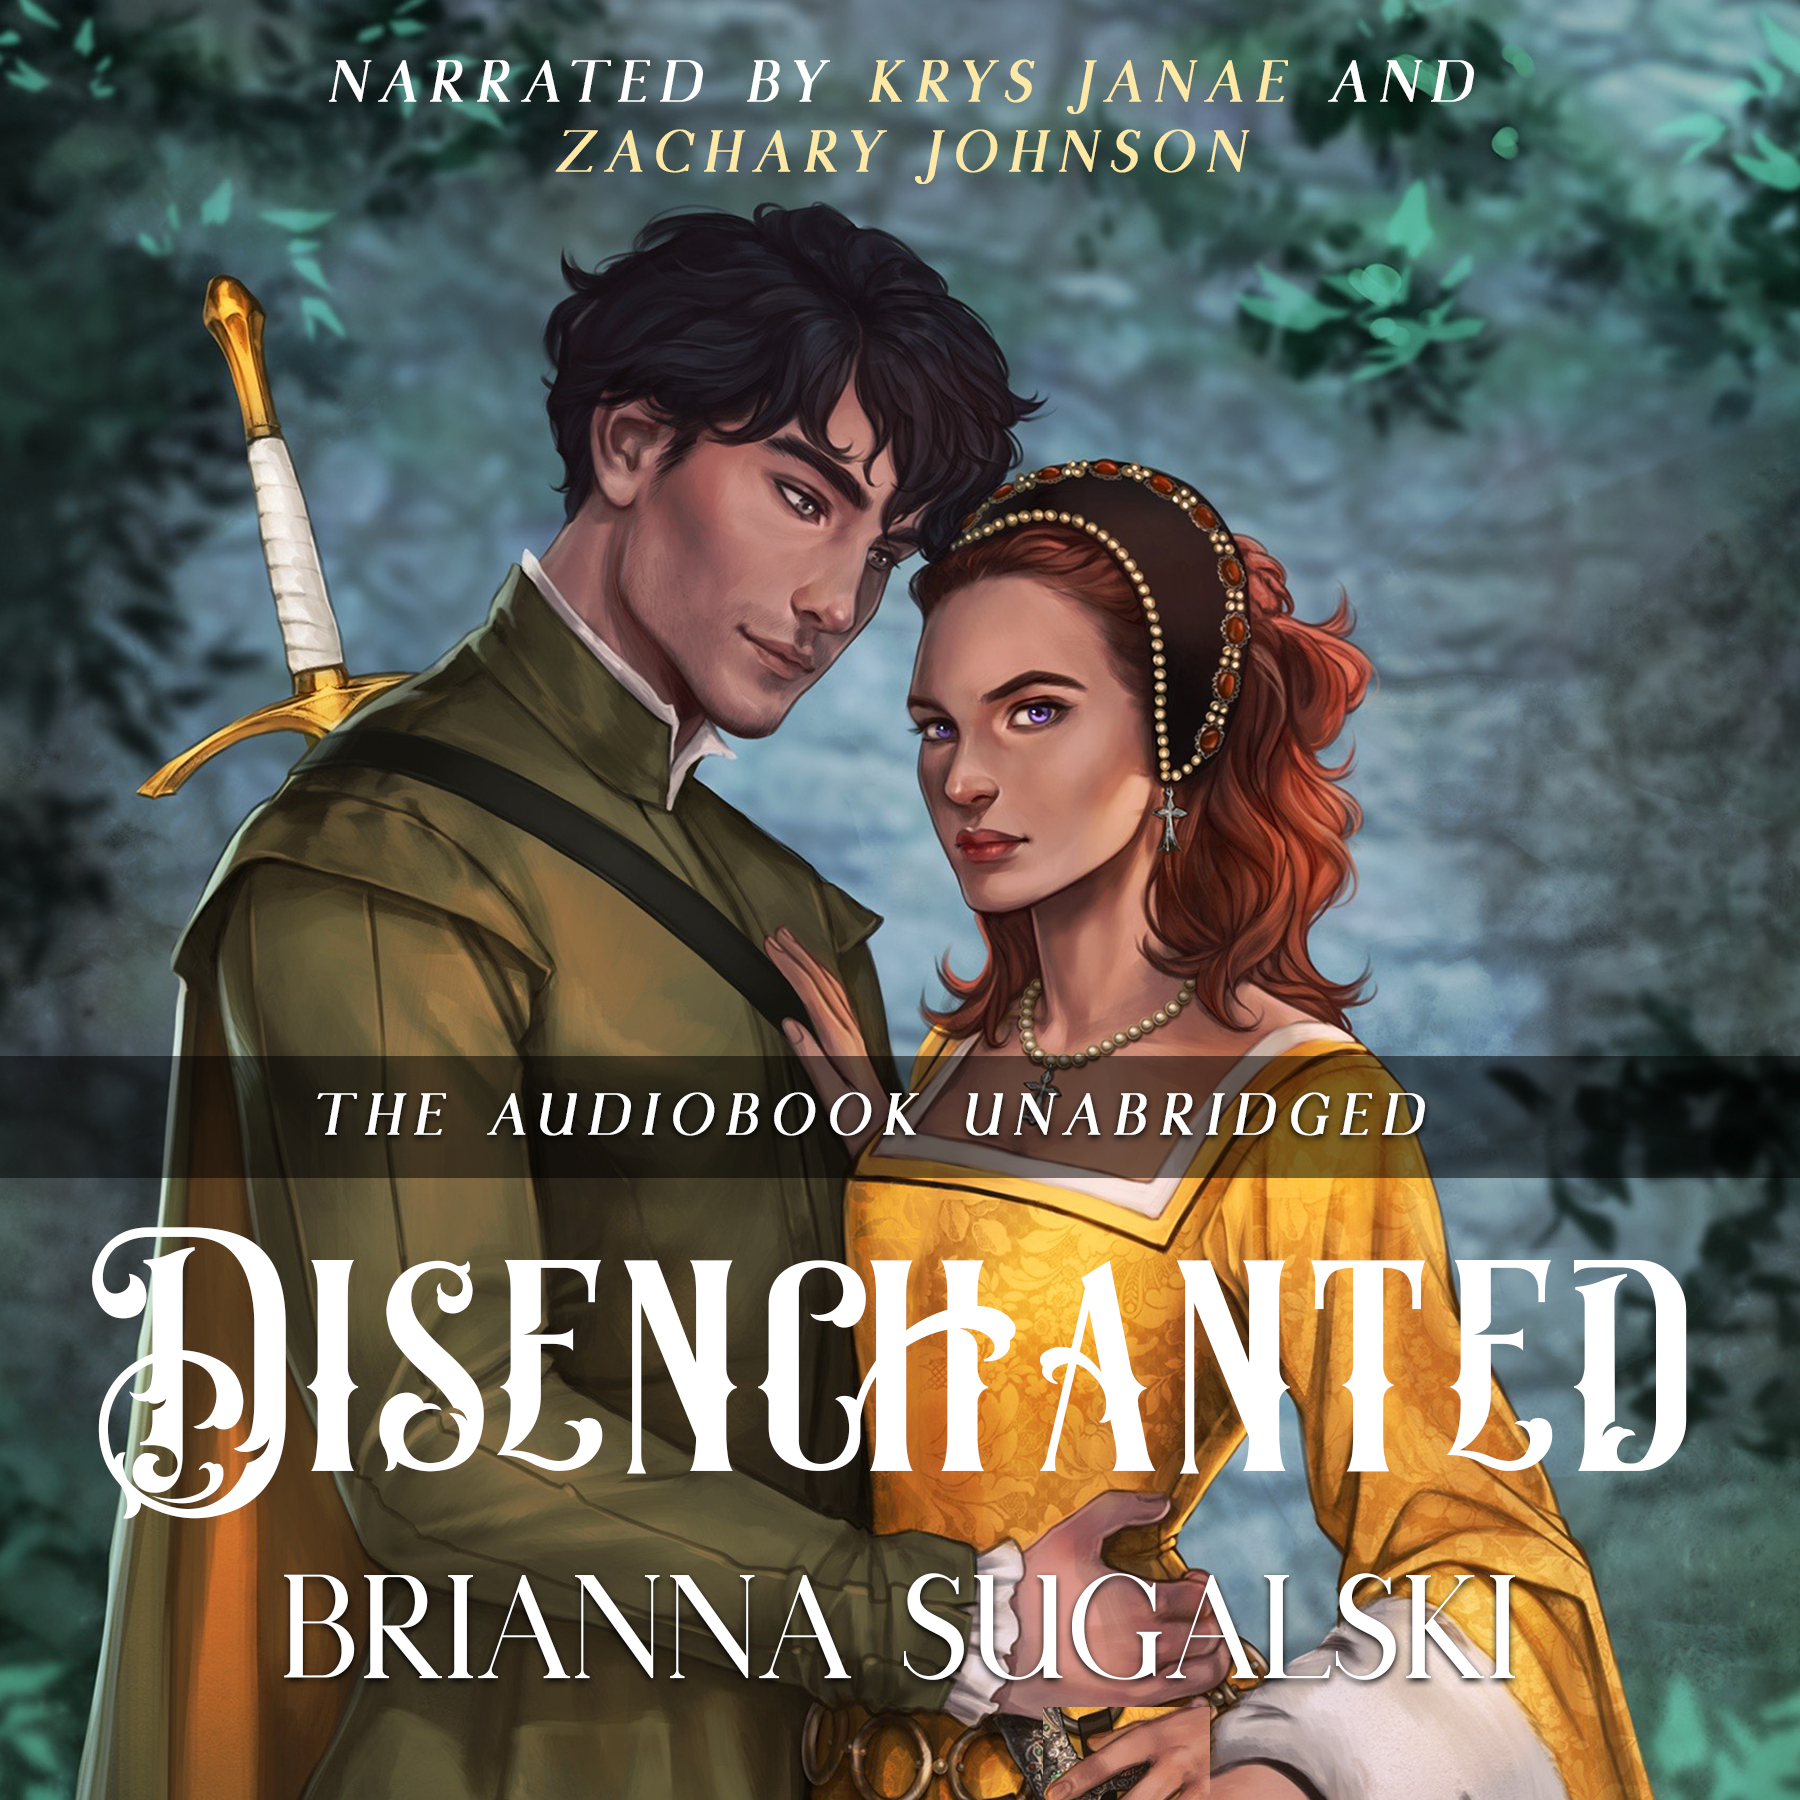 Disenchanted by Brianna Sugalski